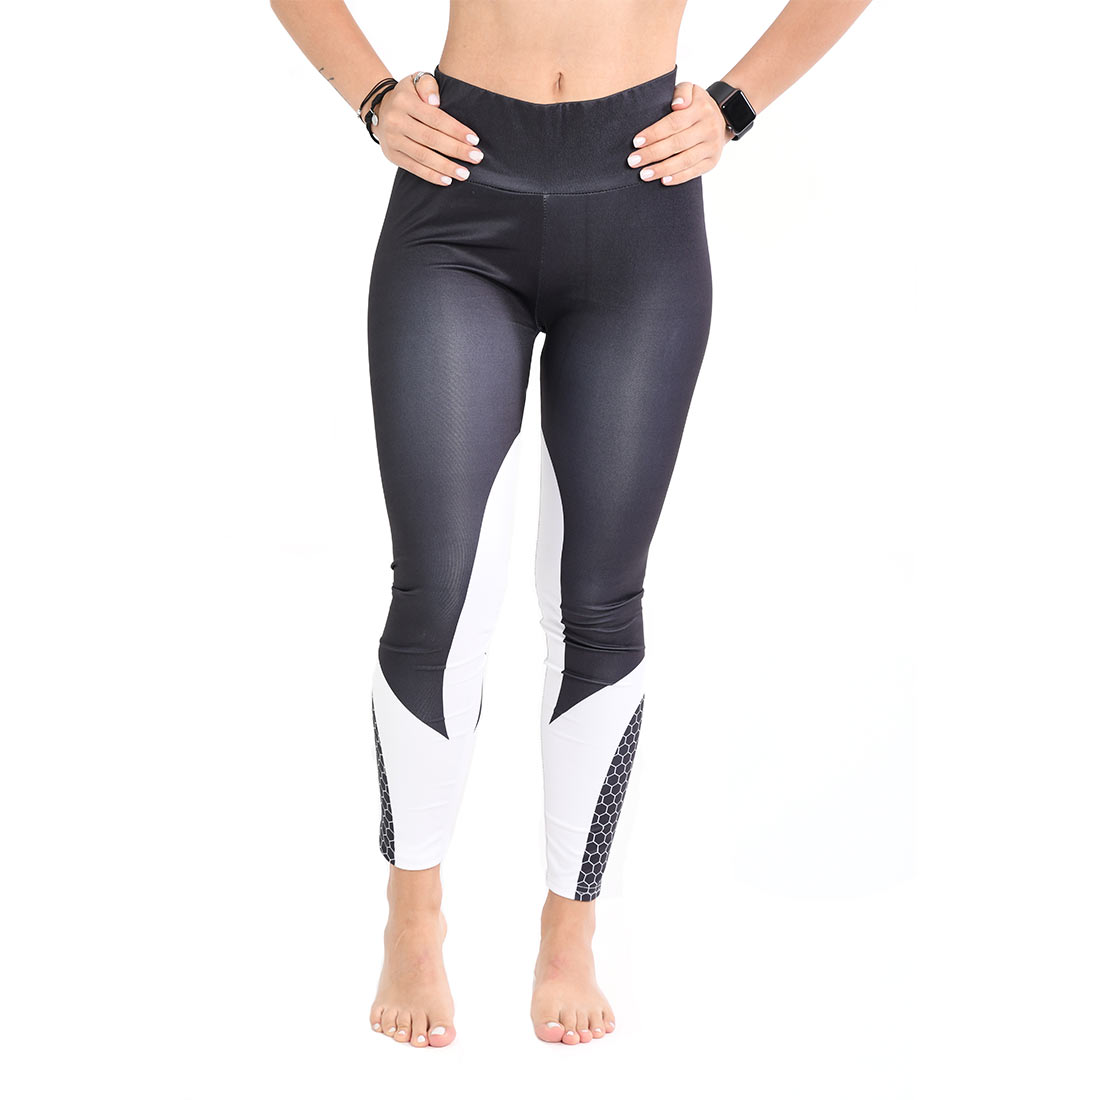 Women's Fitness Leggings BANG! Black & White E-store repinpeace